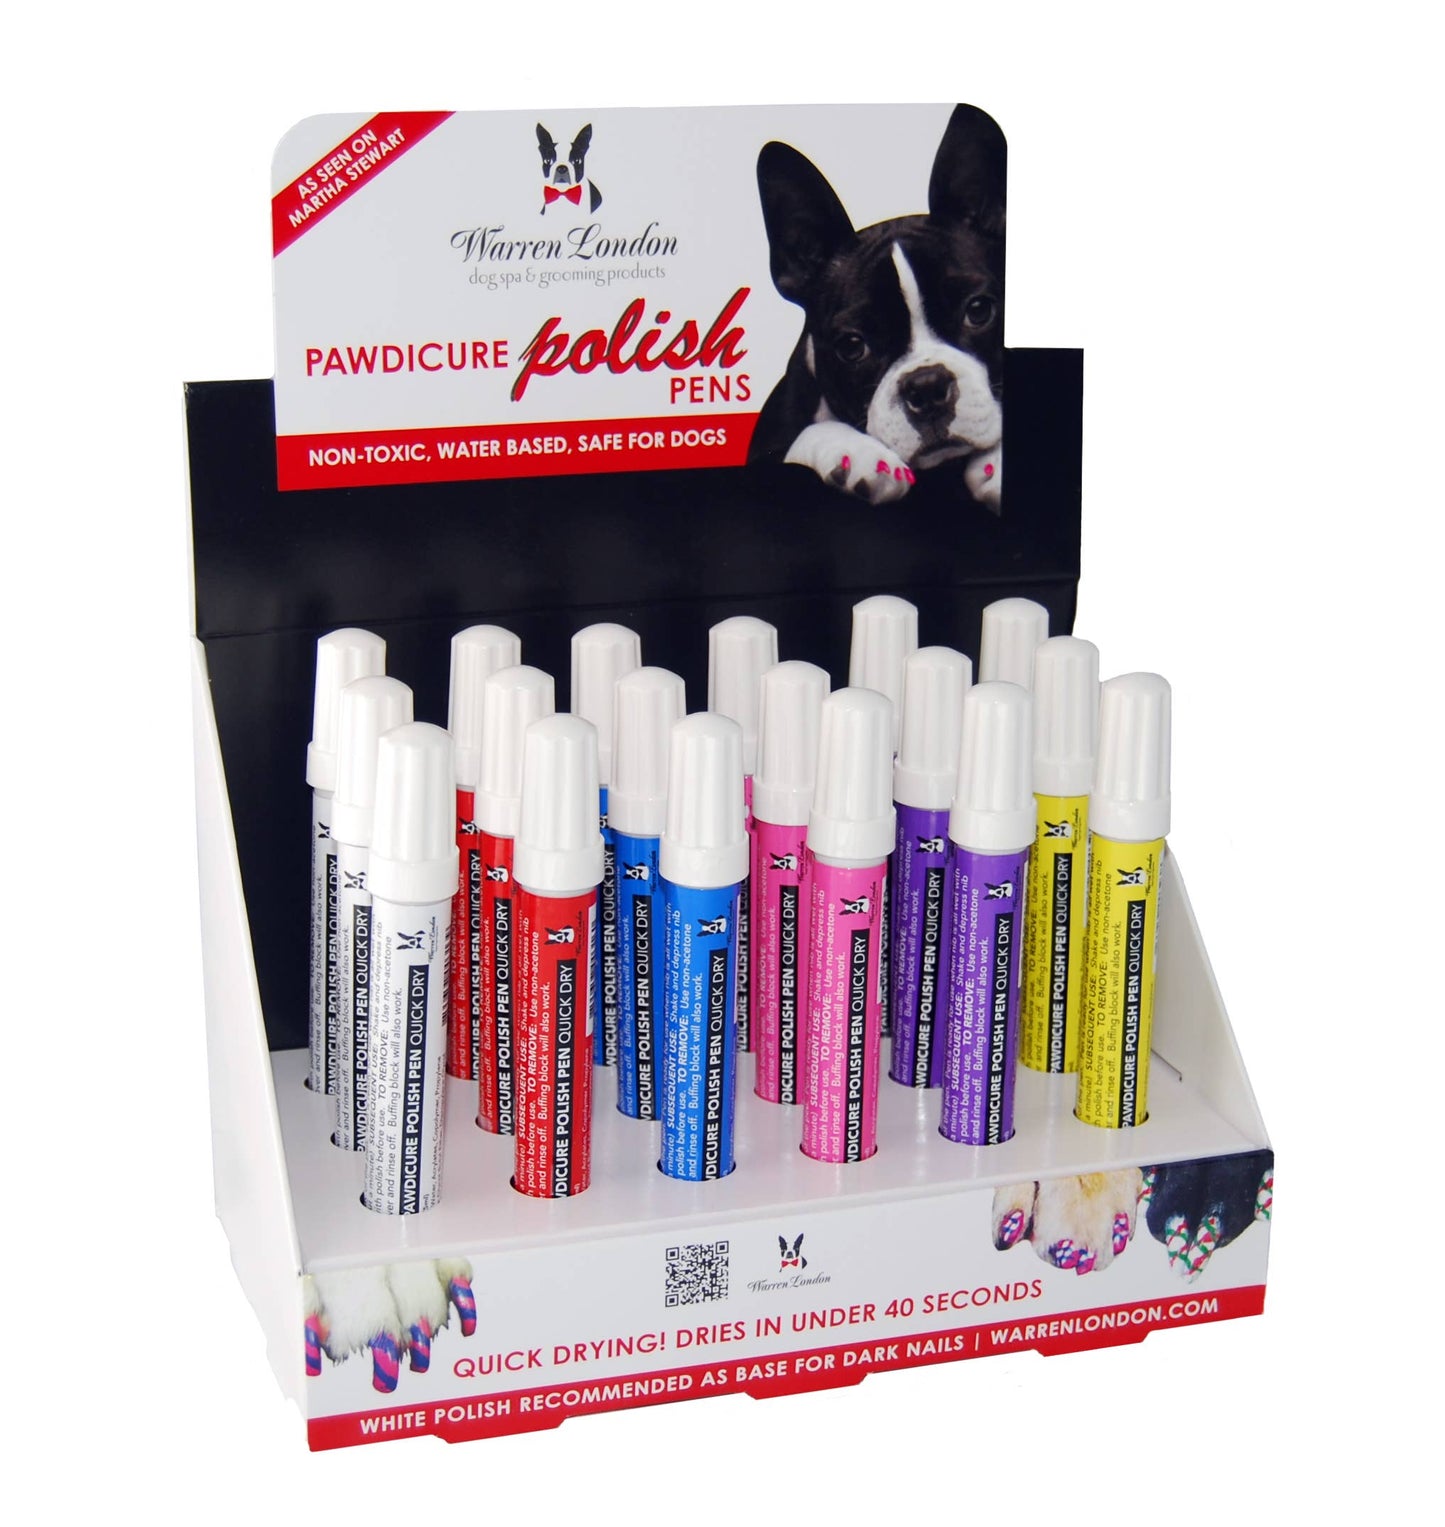 Warren London Dog Products - Cardboard Display with 18 Nail Polish Pens - Basic Colors  Image